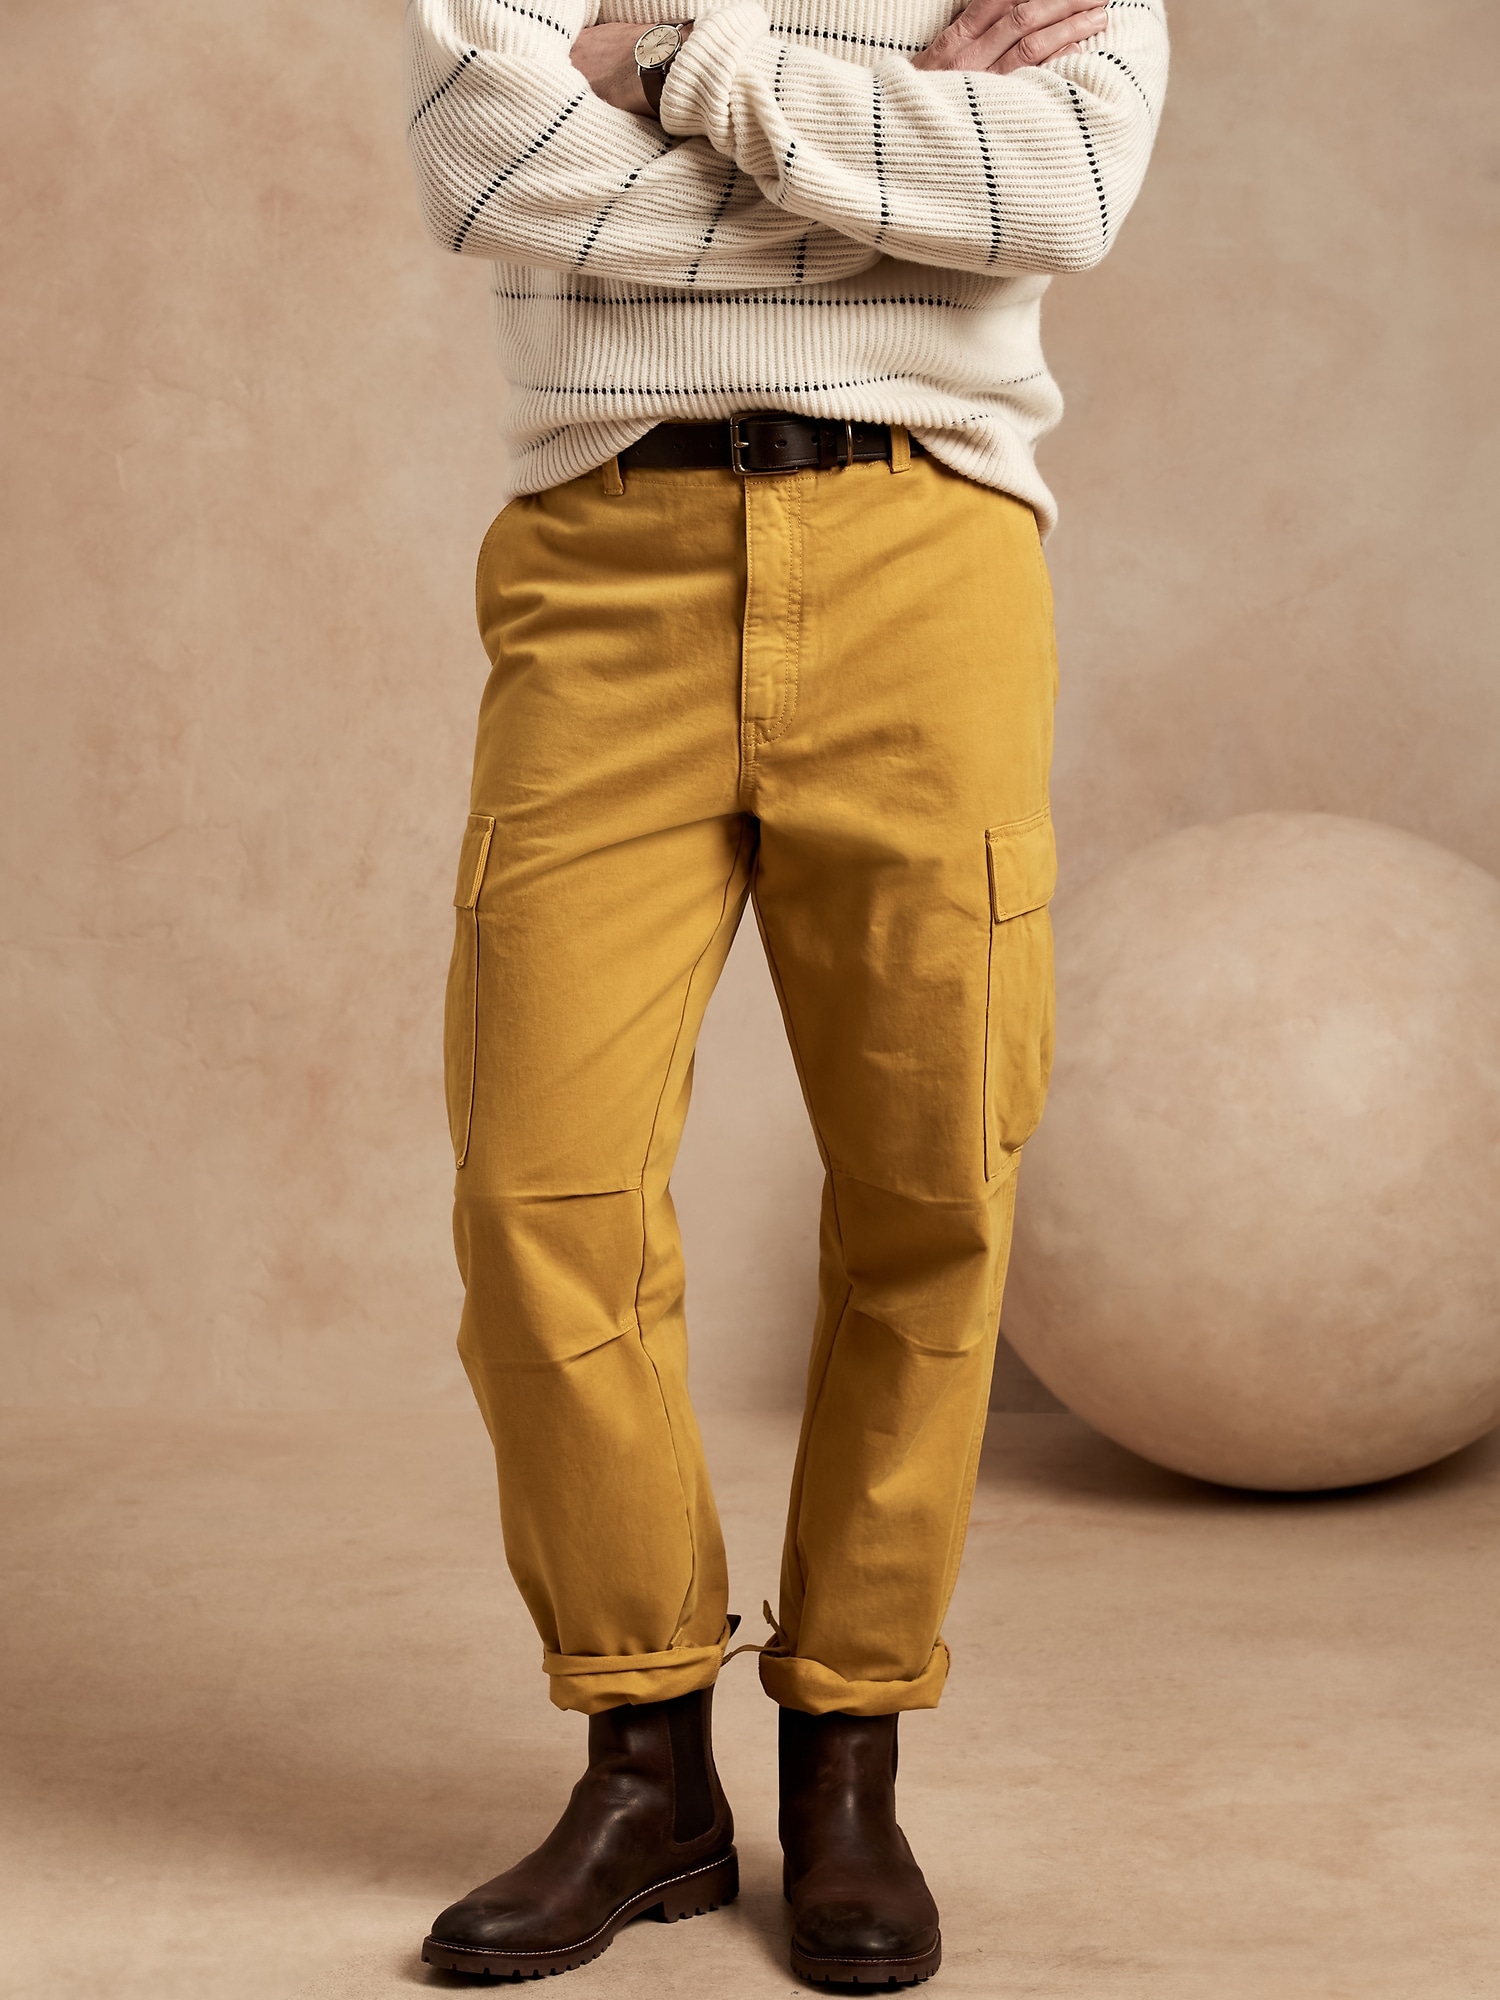 Dapper Man: Photo | Mens outfits, Mens yellow pants, Pants outfit men